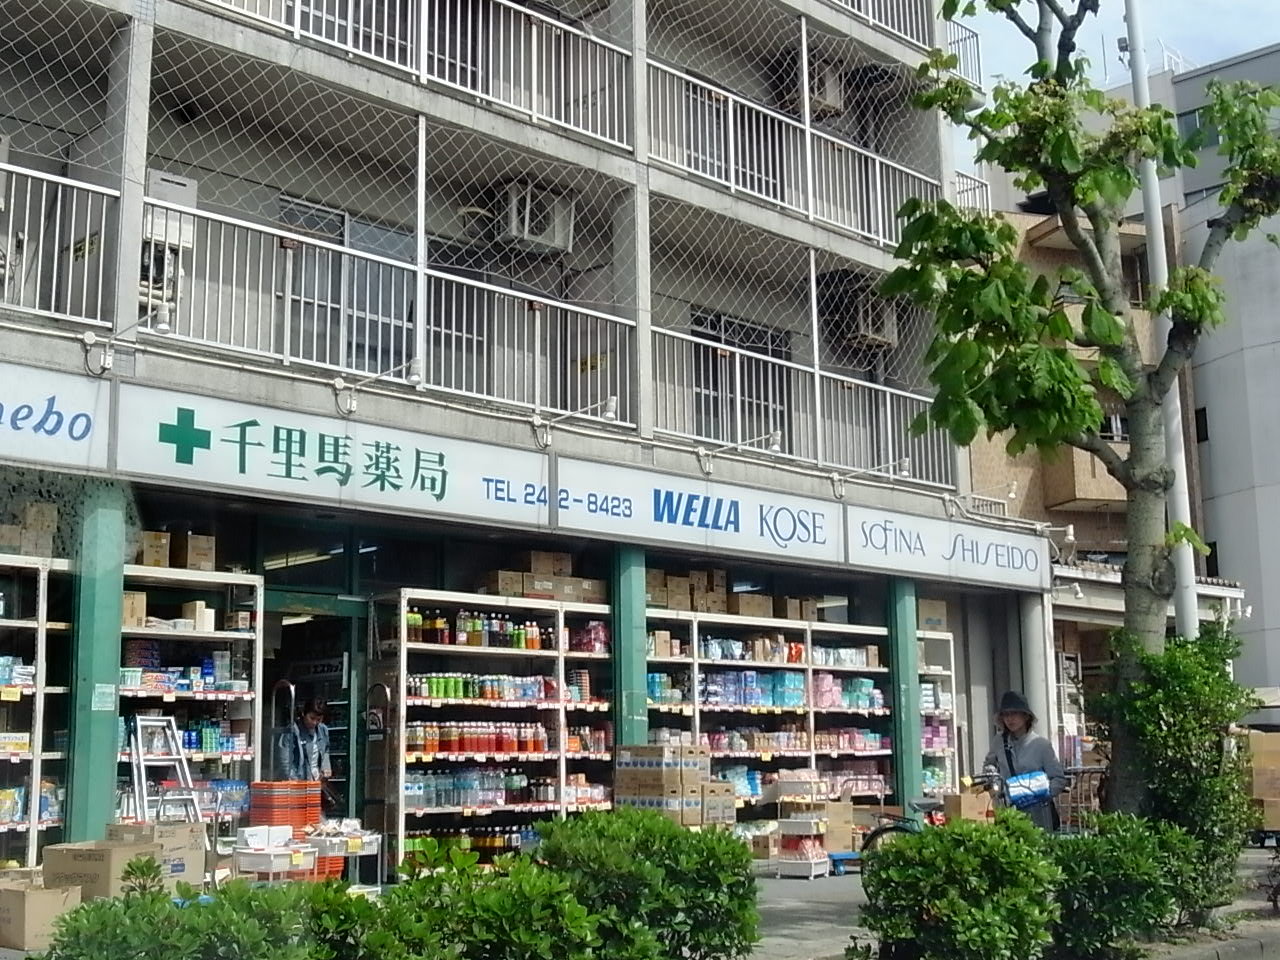 Dorakkusutoa. Chisato horse pharmacy Shinyoung store (drugstore) to 400m